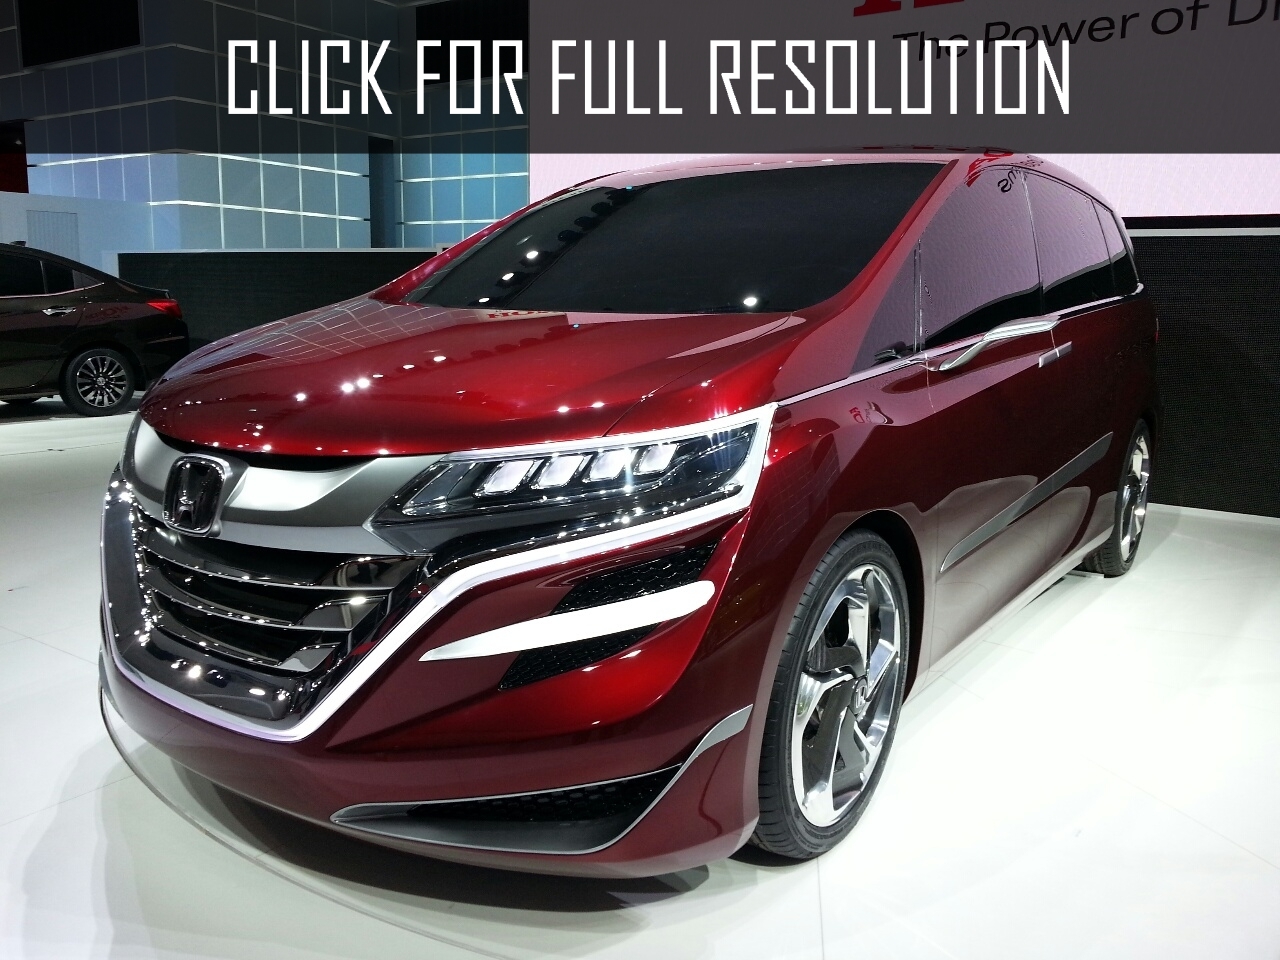 2017 Honda Odyssey redesign